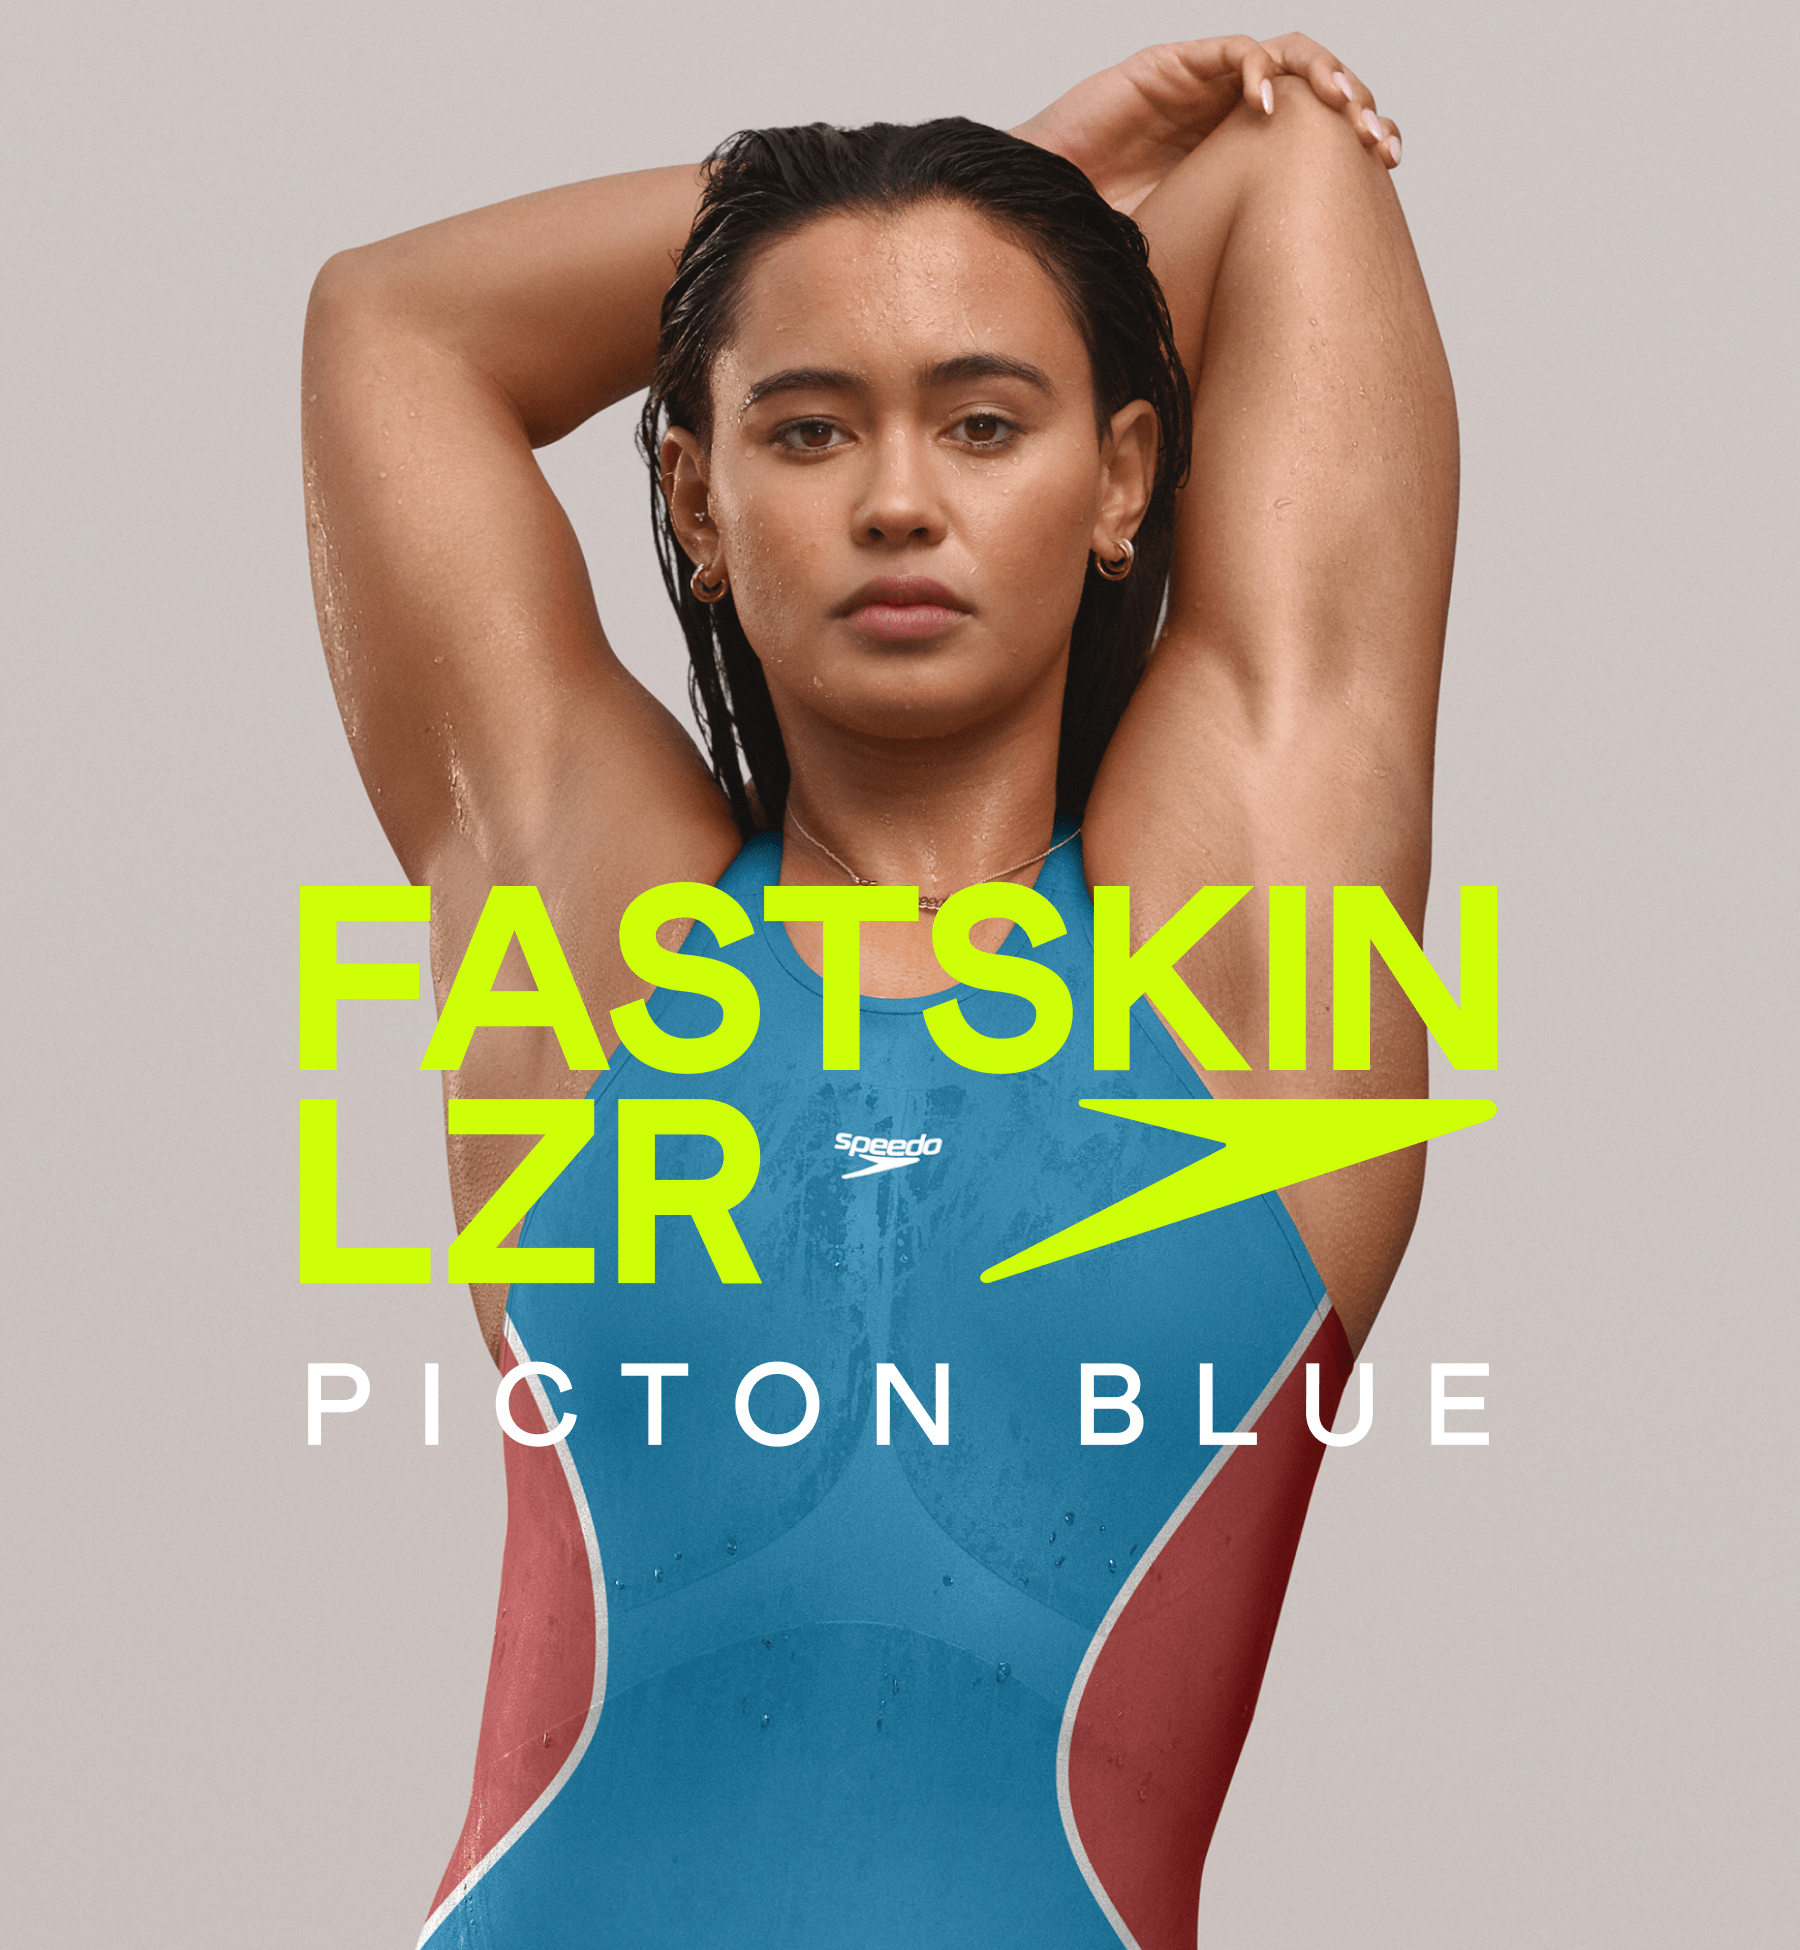 Fastskin LZR Picton Blue